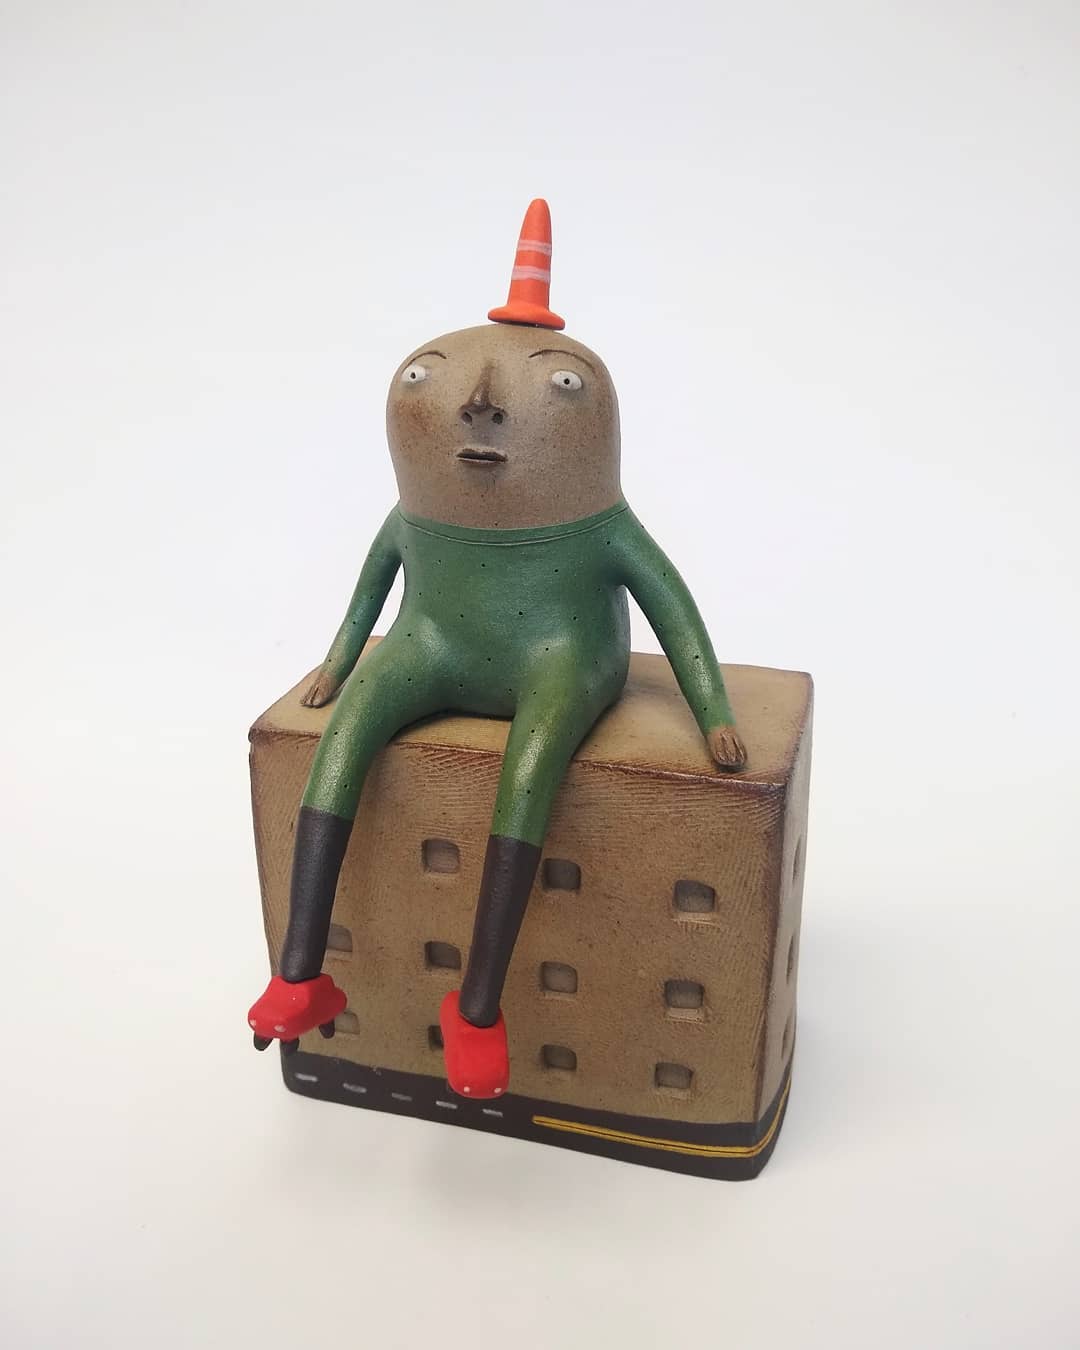 Amusing Ceramic Sculptures Of Quirky Creatures By Luciano Polverigiani (27)